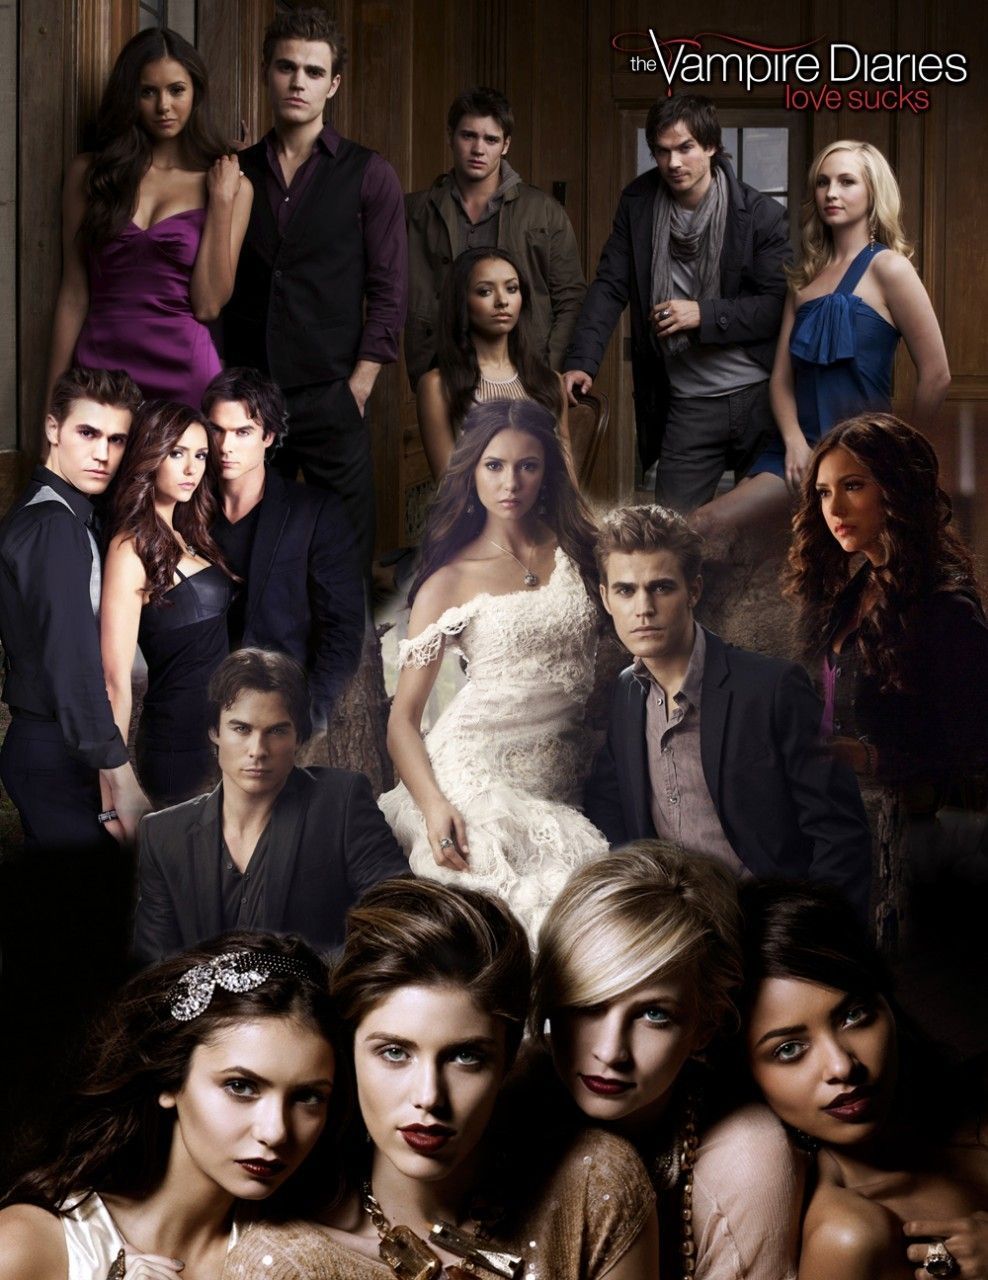 The Vampire Diaries Cast Blanket .com